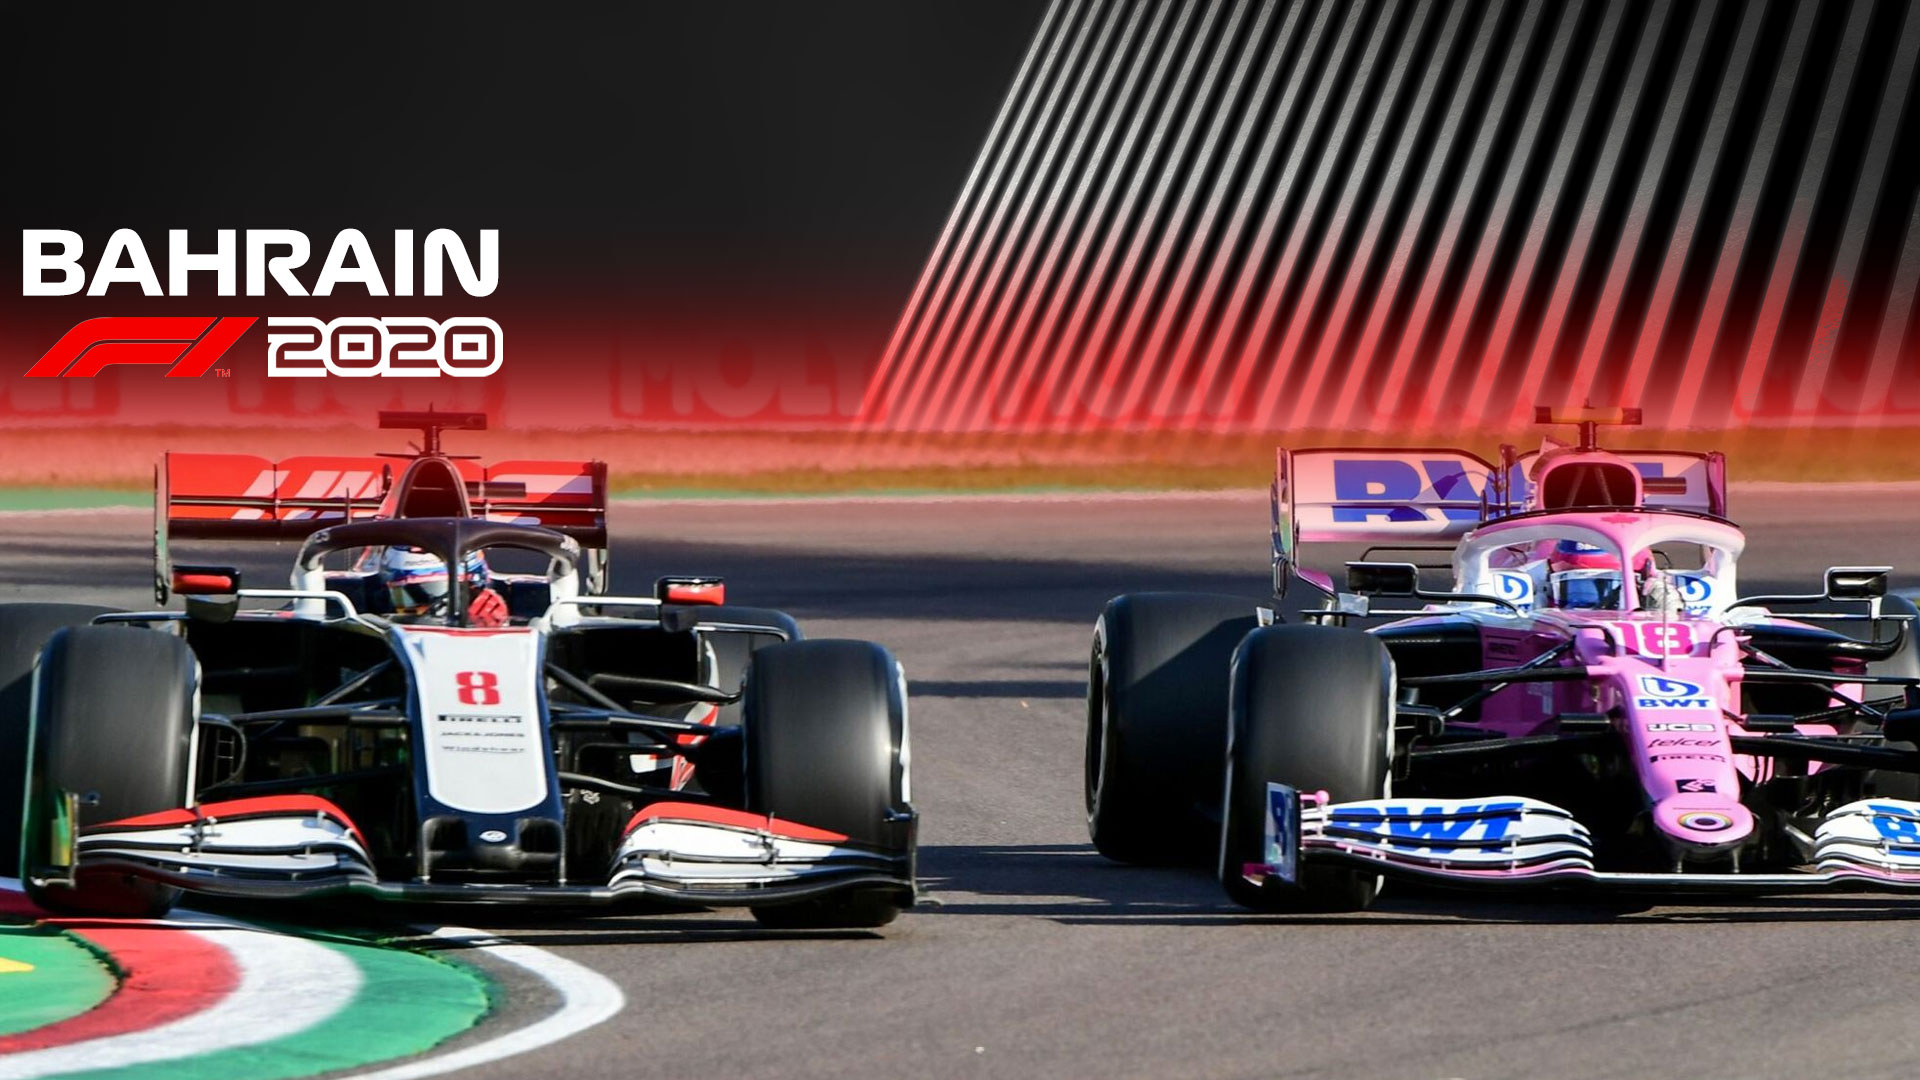 HD F1 Bahrain Grand Prix 2020 Live Streaming Reddit INSCMagazine